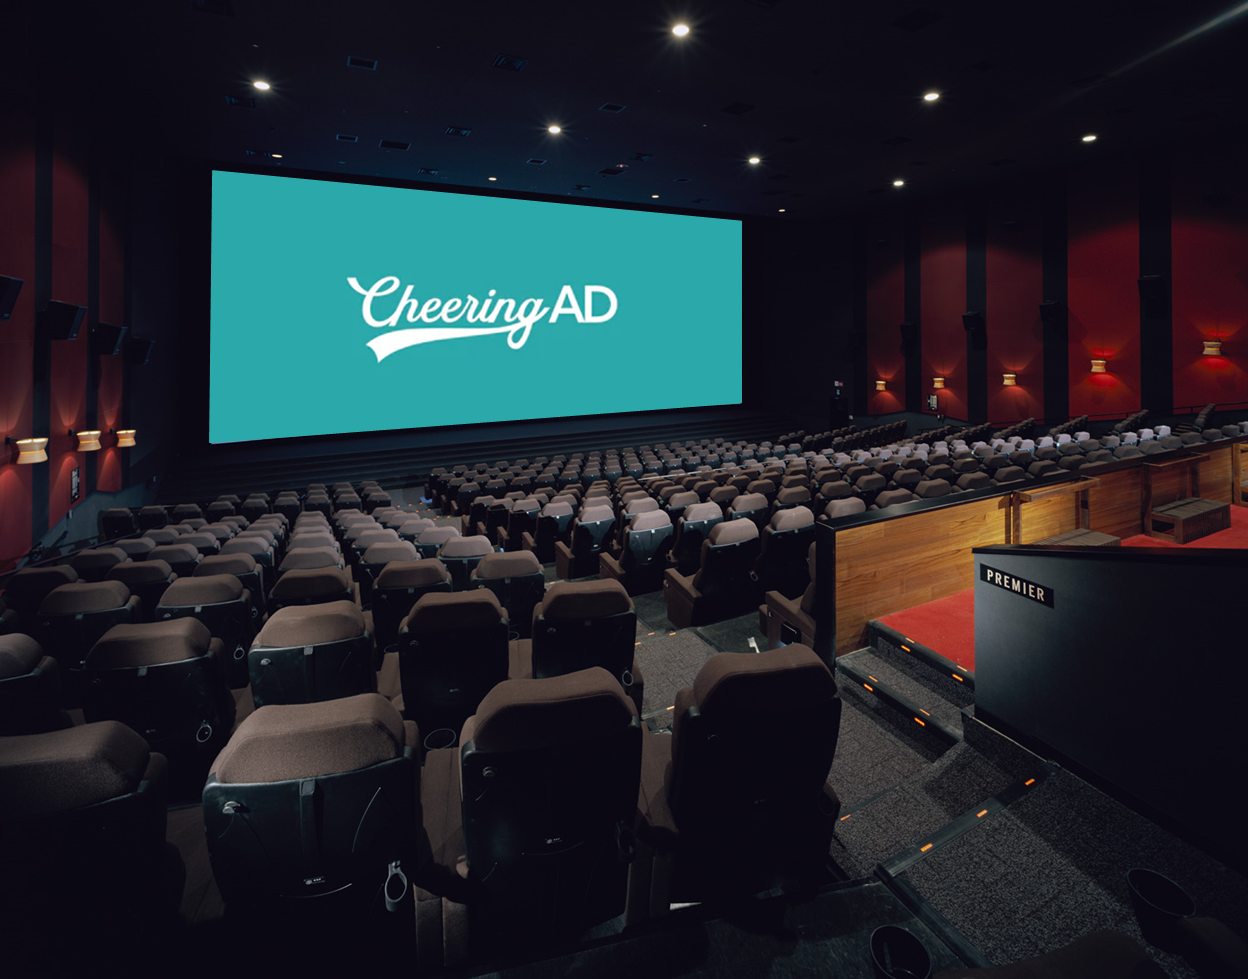 UN -A -ADENCE CINEMA Intermonment Advertising 4 주 15 초 (복사)